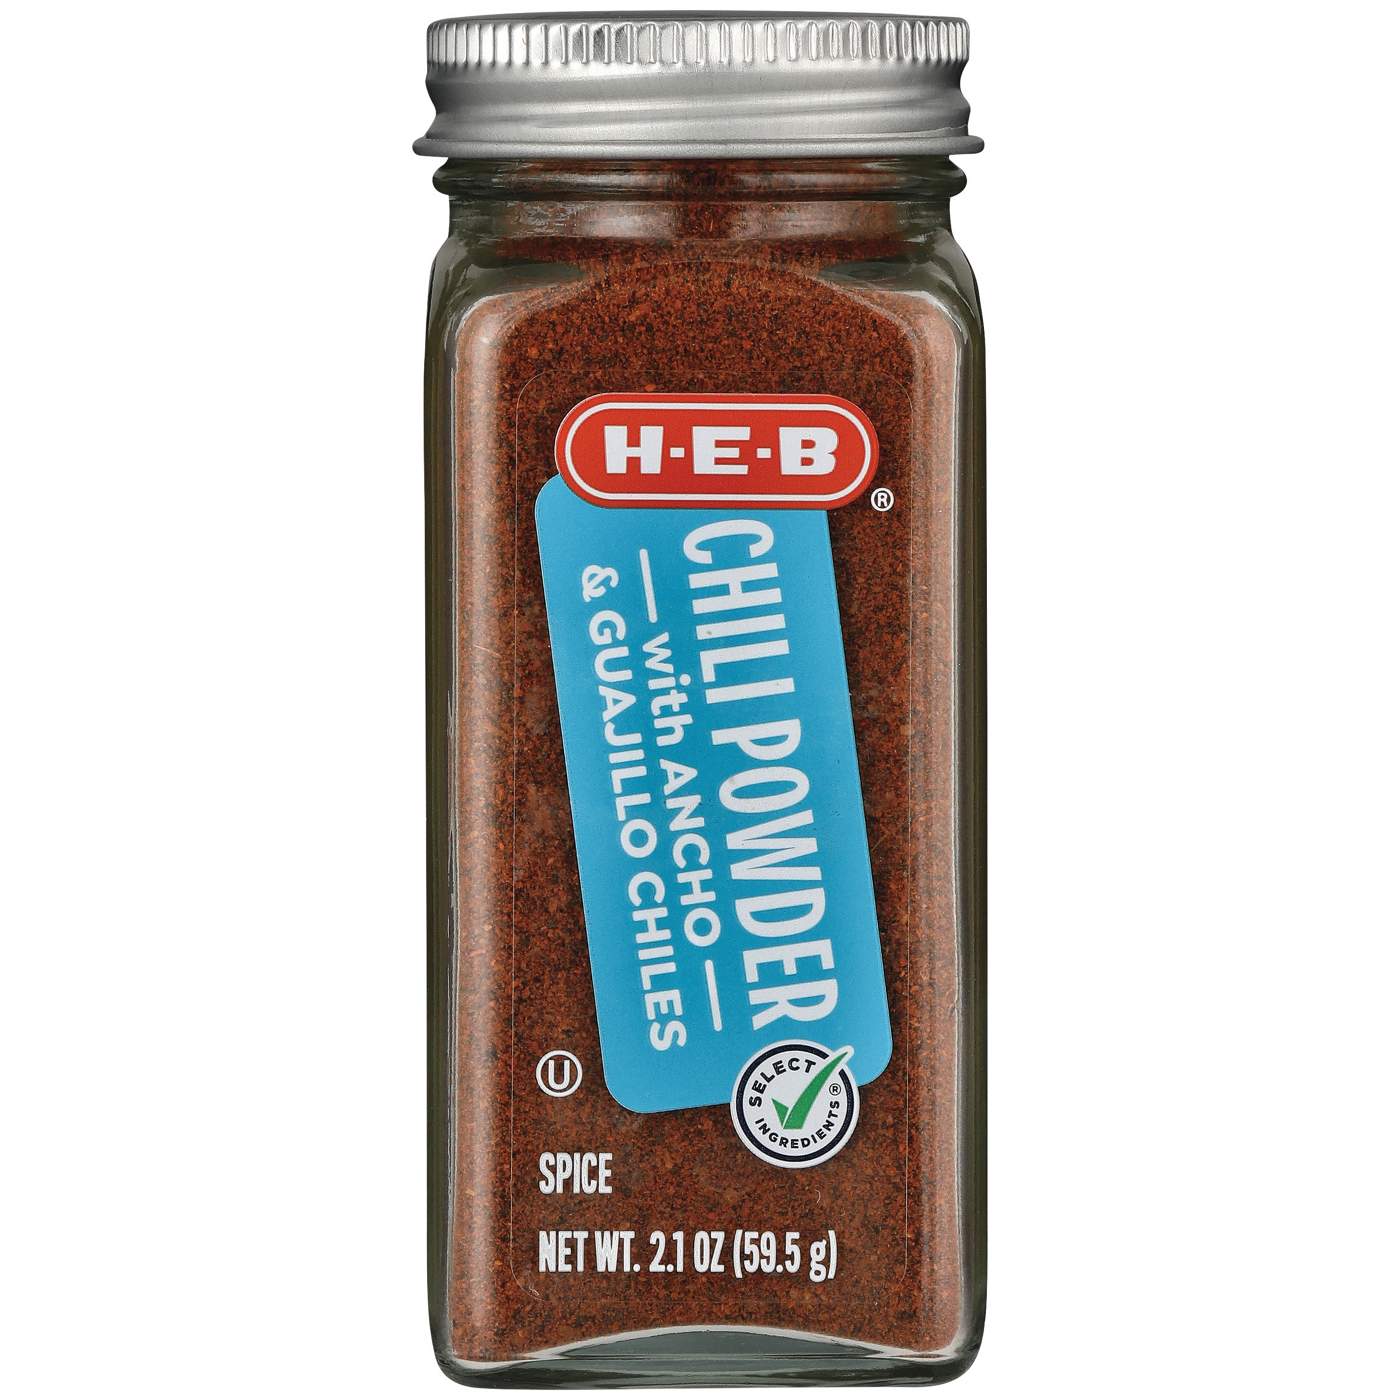 H-E-B Chili Powder; image 1 of 2